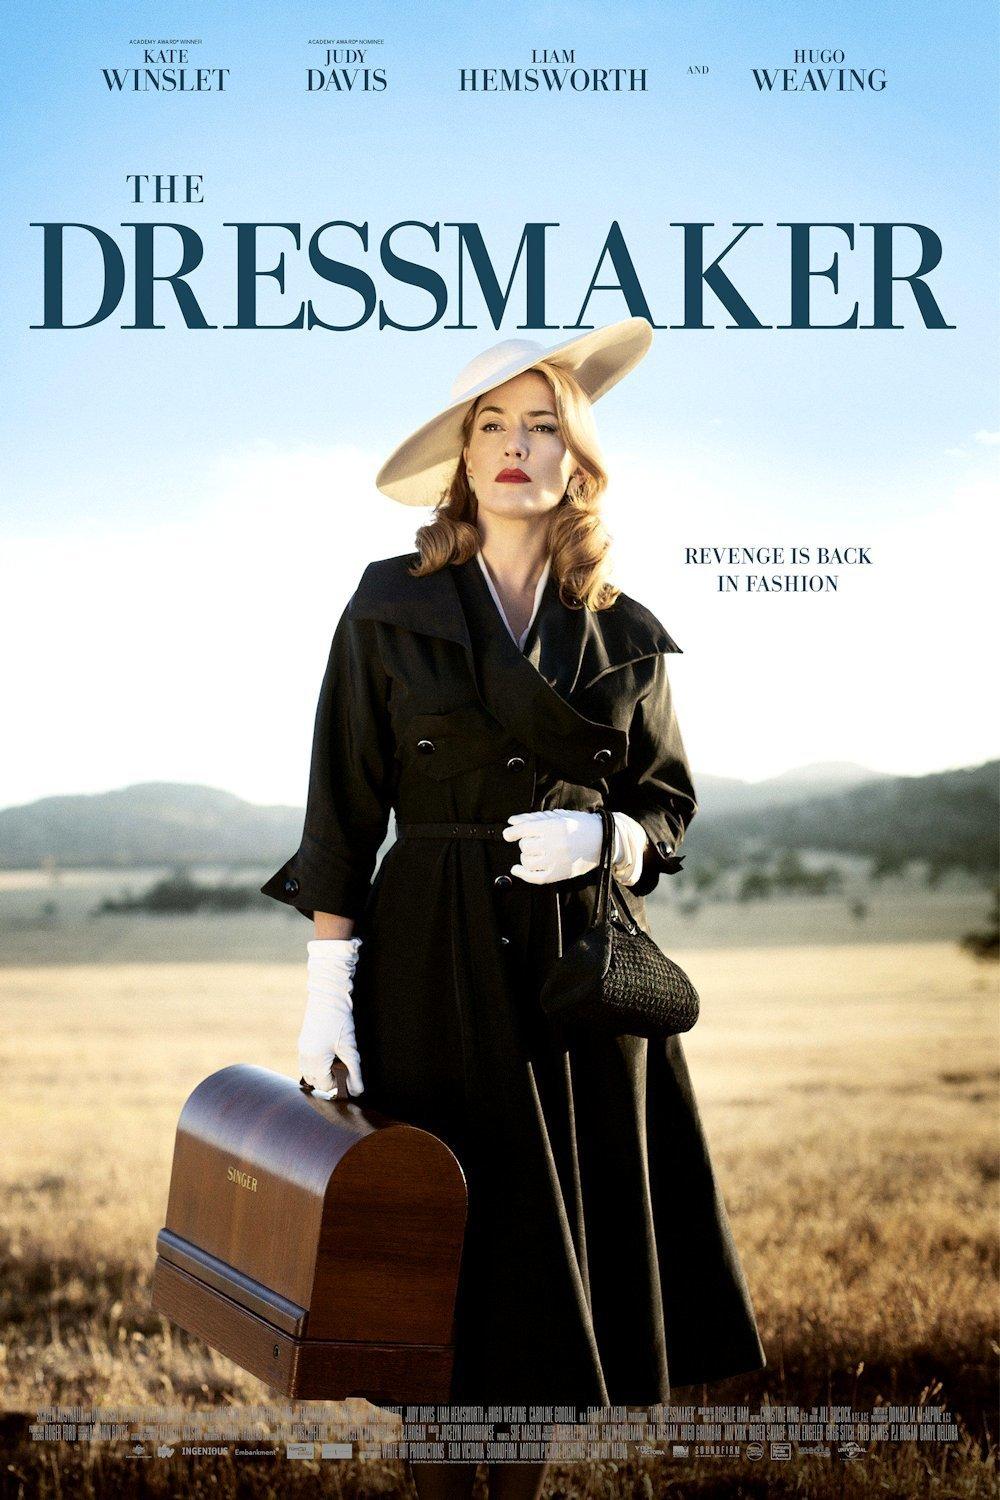 the dressmaker